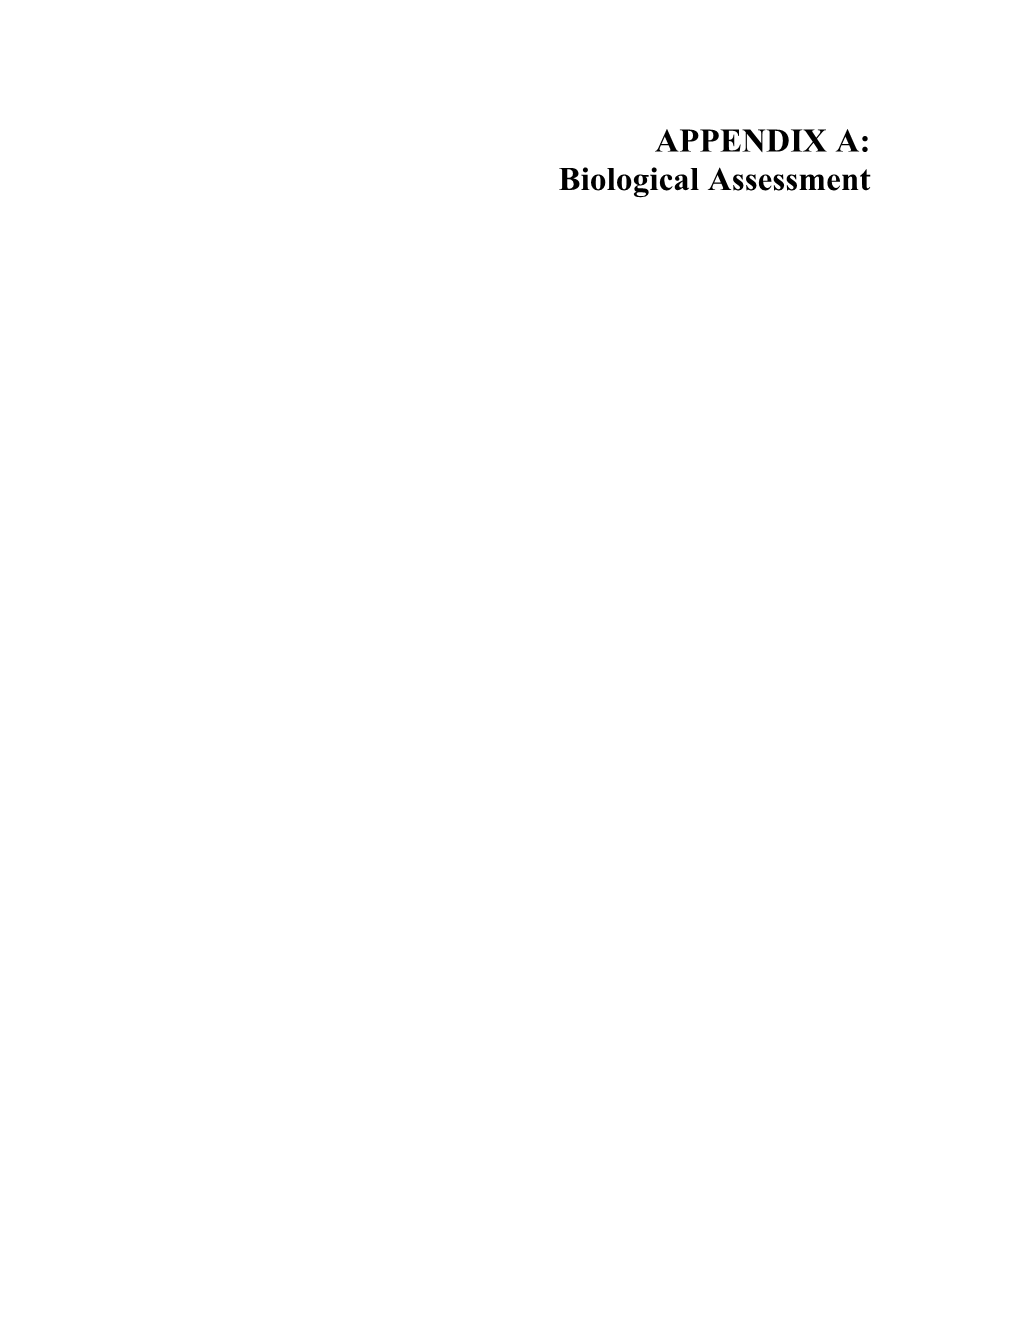 Biological Assessment